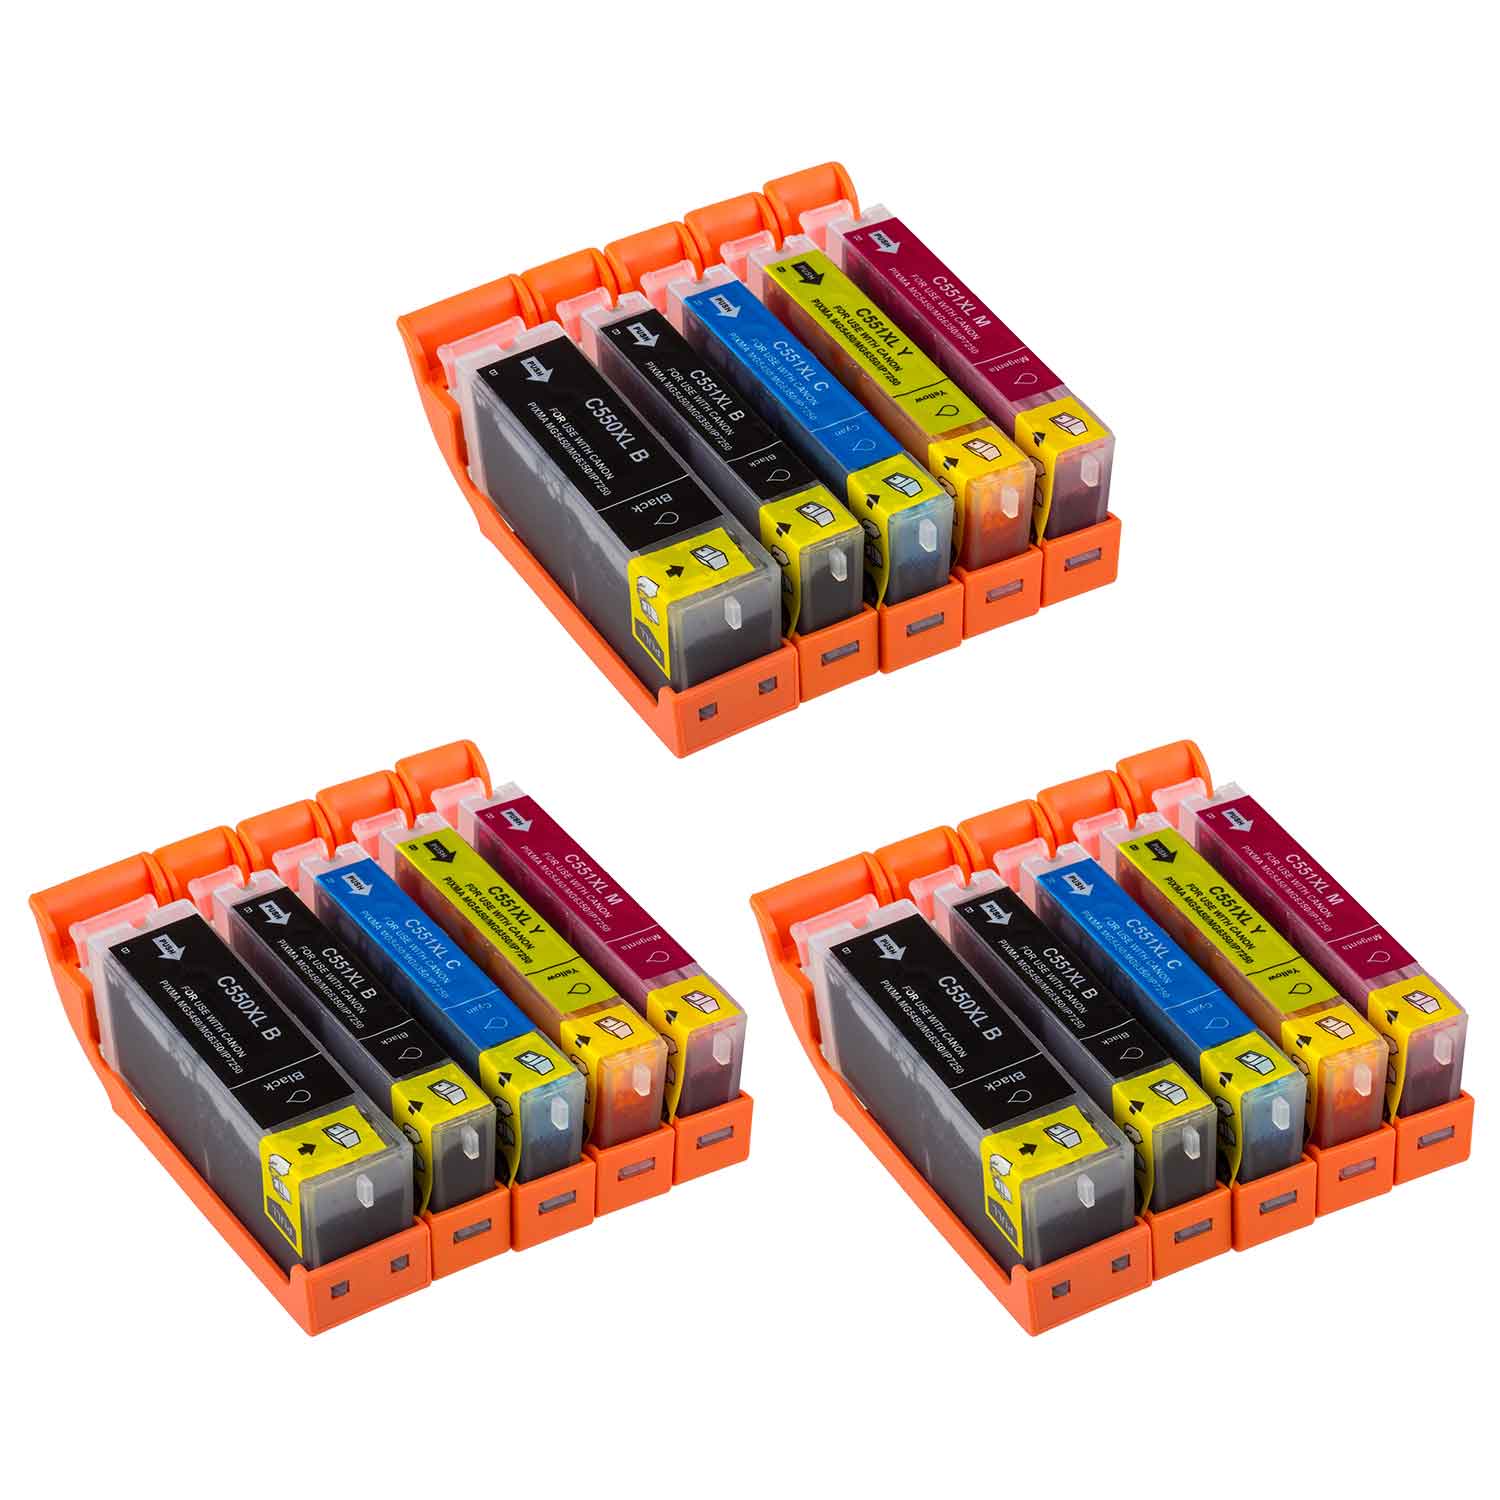 7dayshop Non-OEM Ink Cartridges PGI-550 XL CLI-551 for Canon Pixma Printers  - 15 Pack